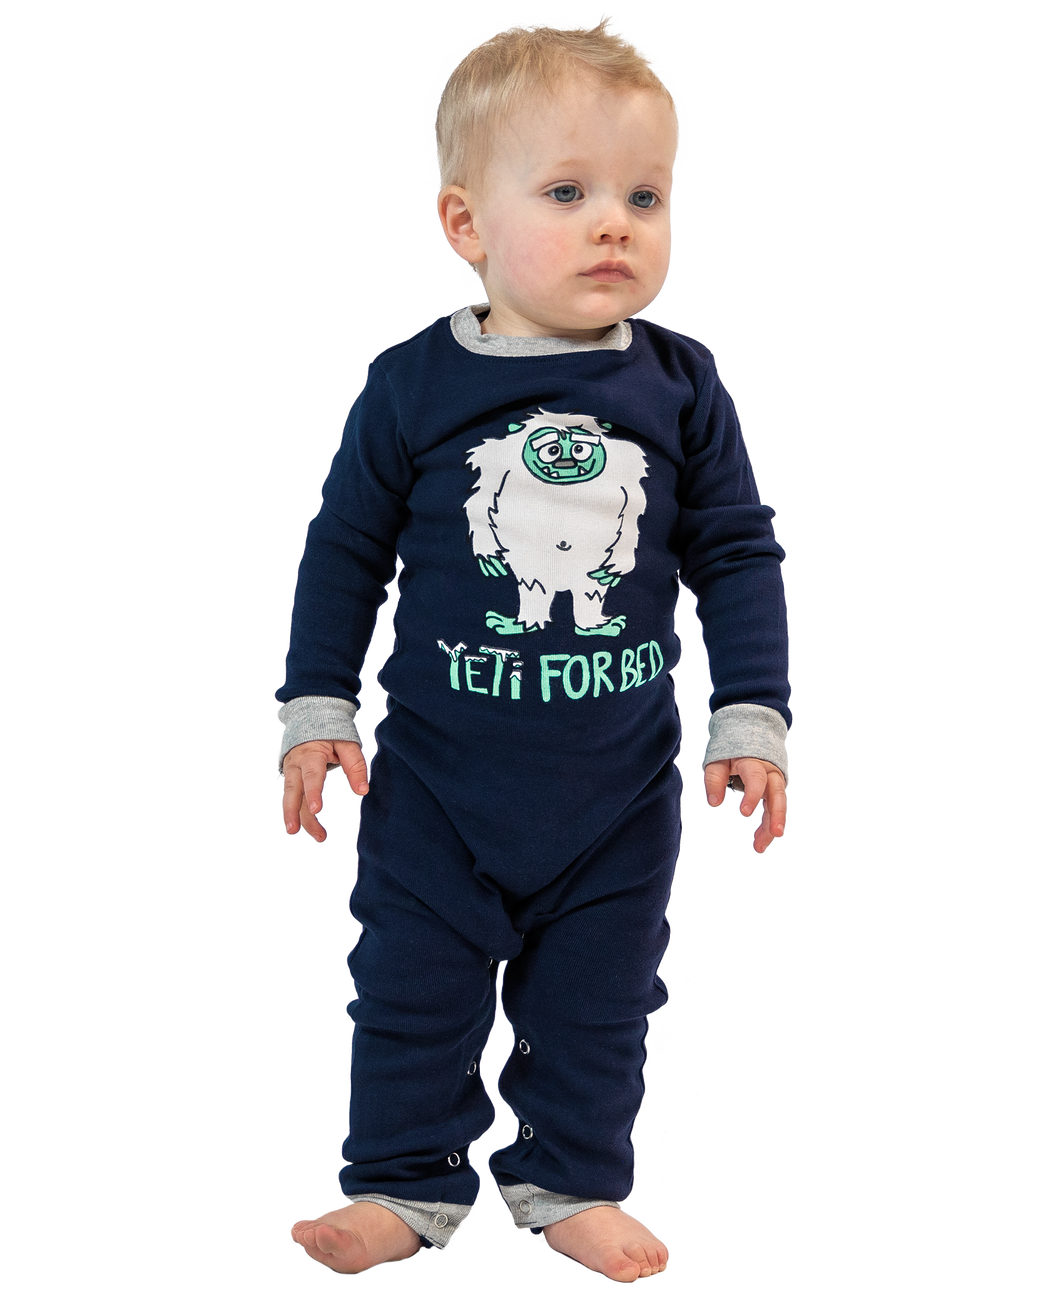 Yeti For Bed Infant Union Suit